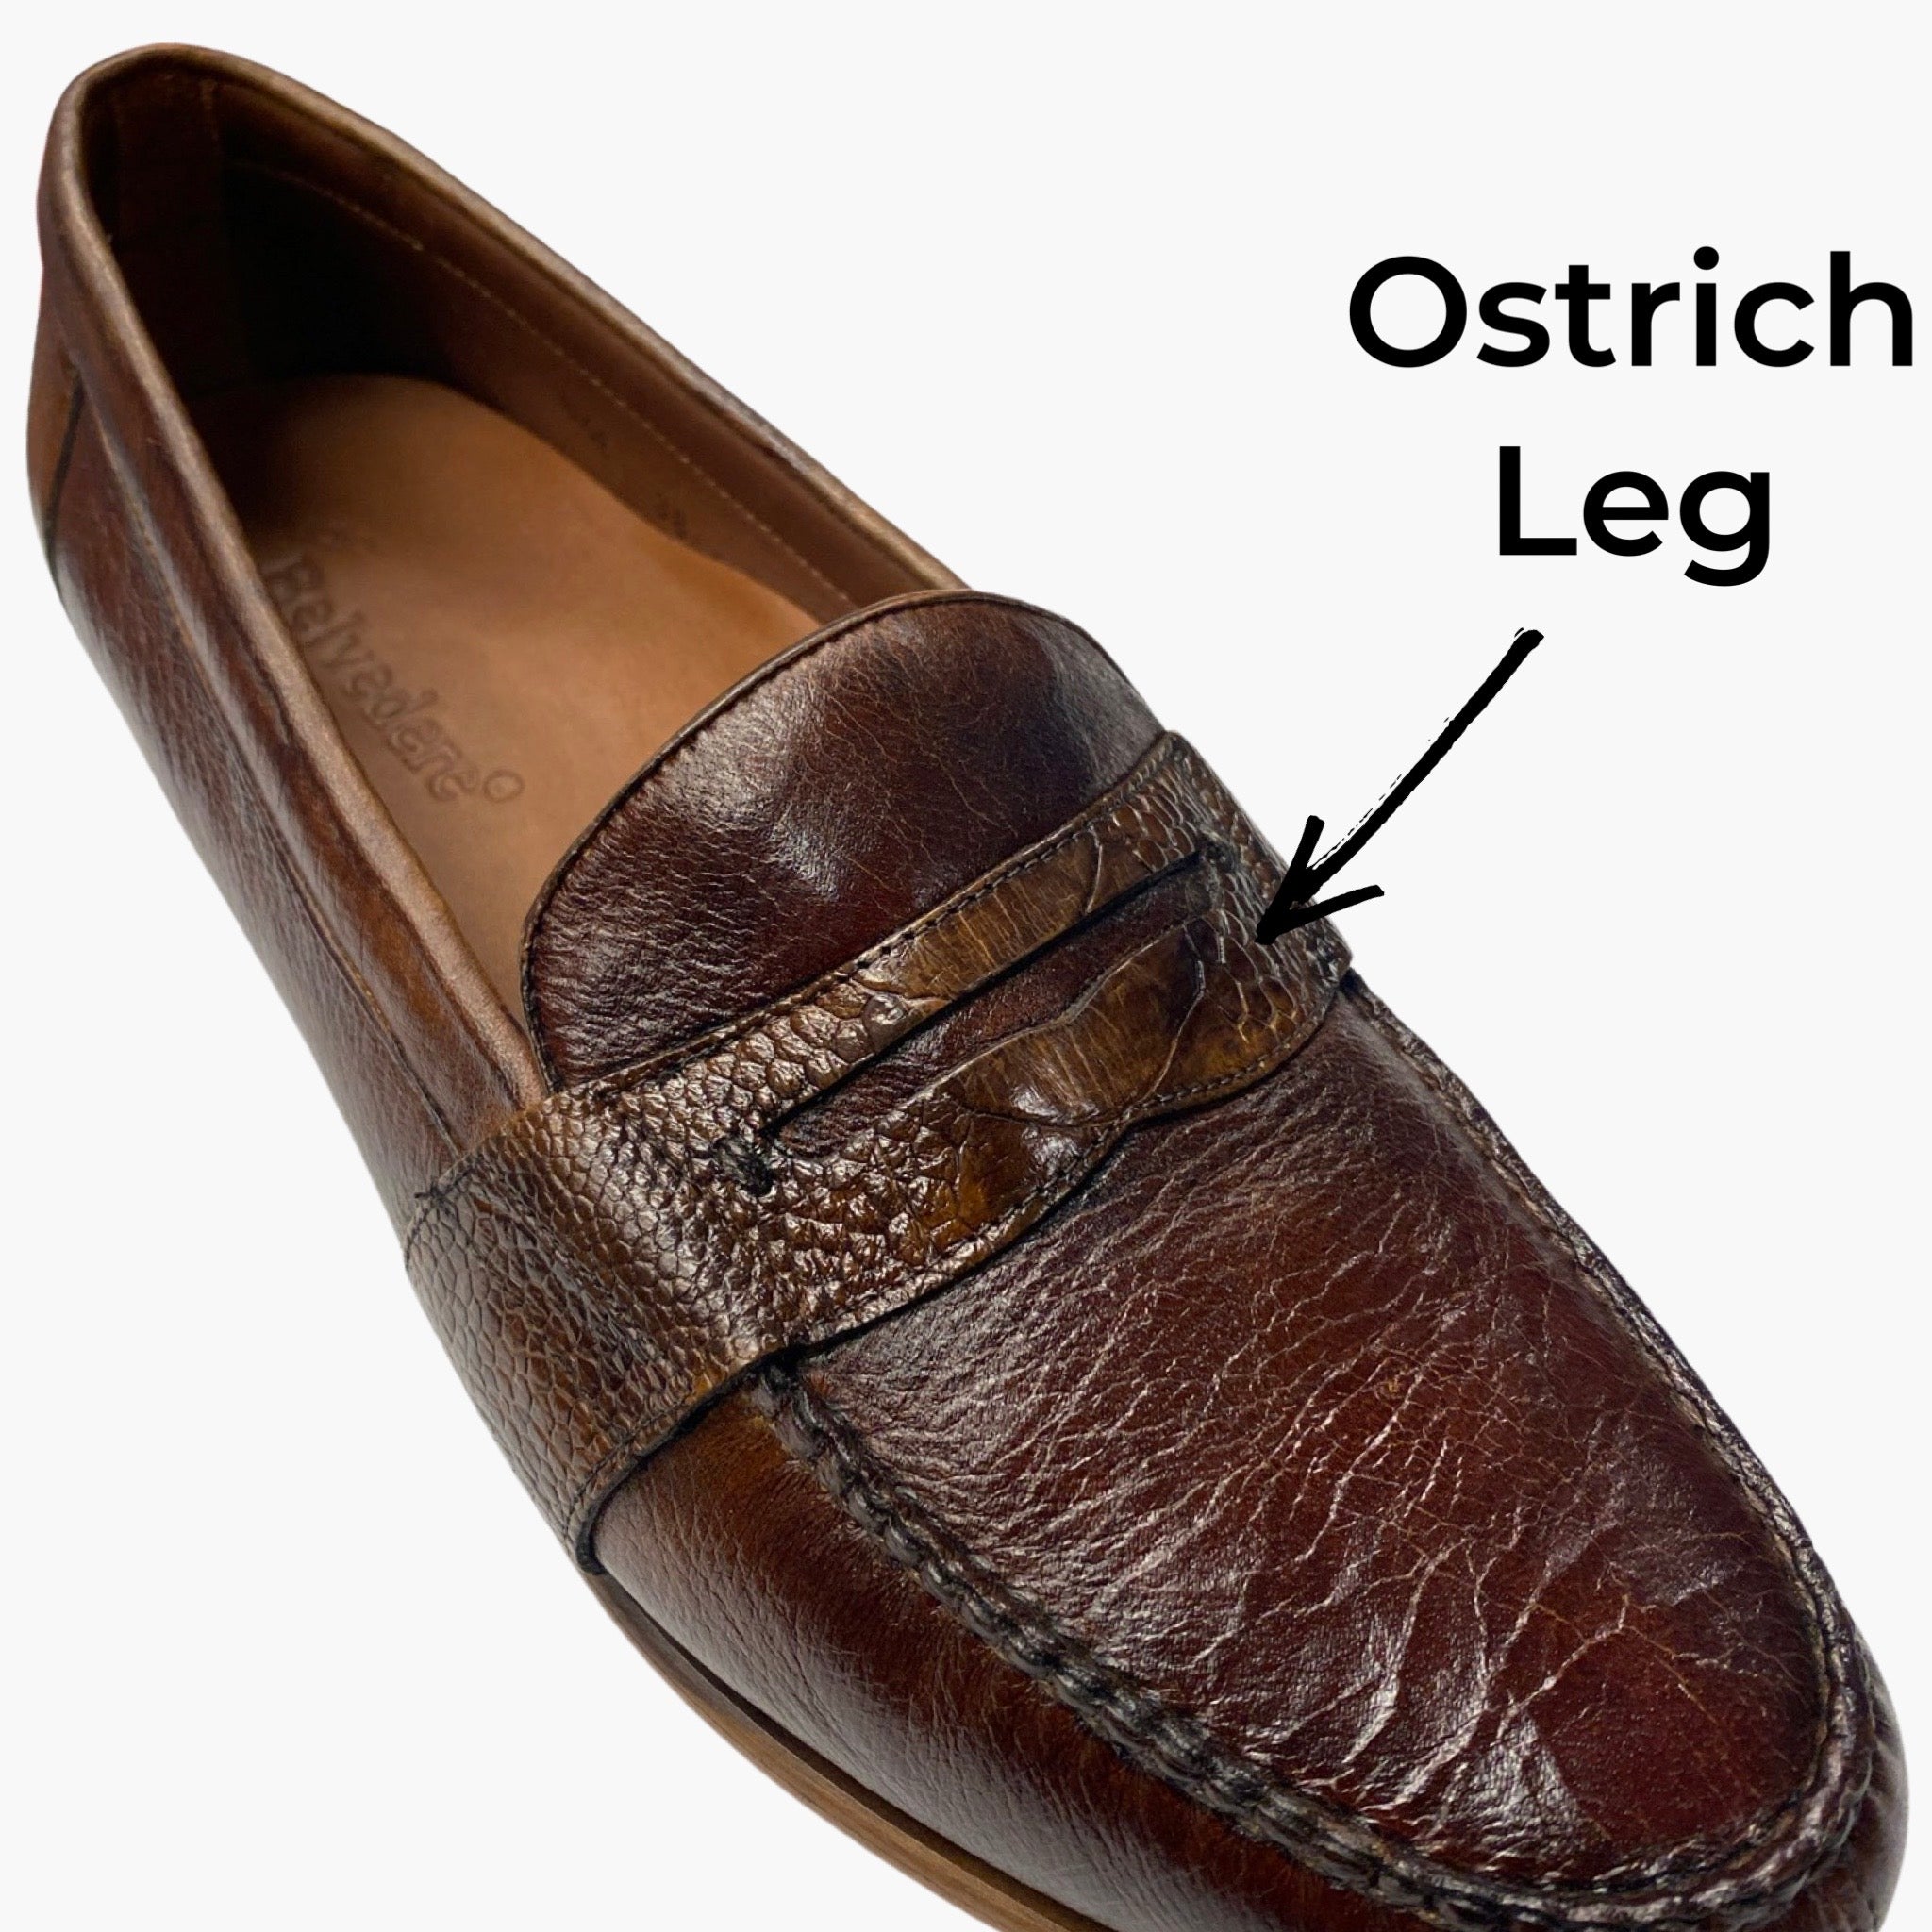 Ostrich leg and deerskin loafer